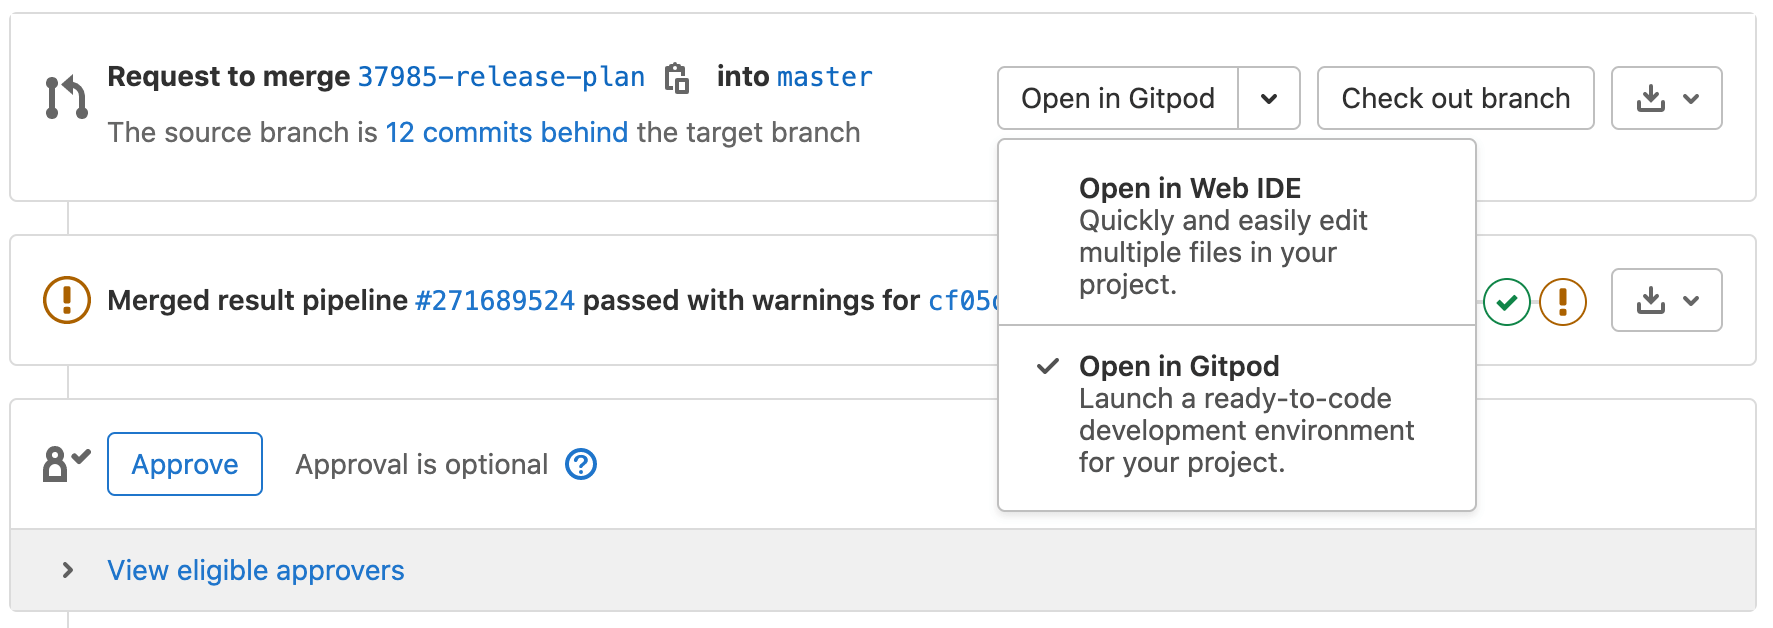 Gitpod button on GitLab merge request